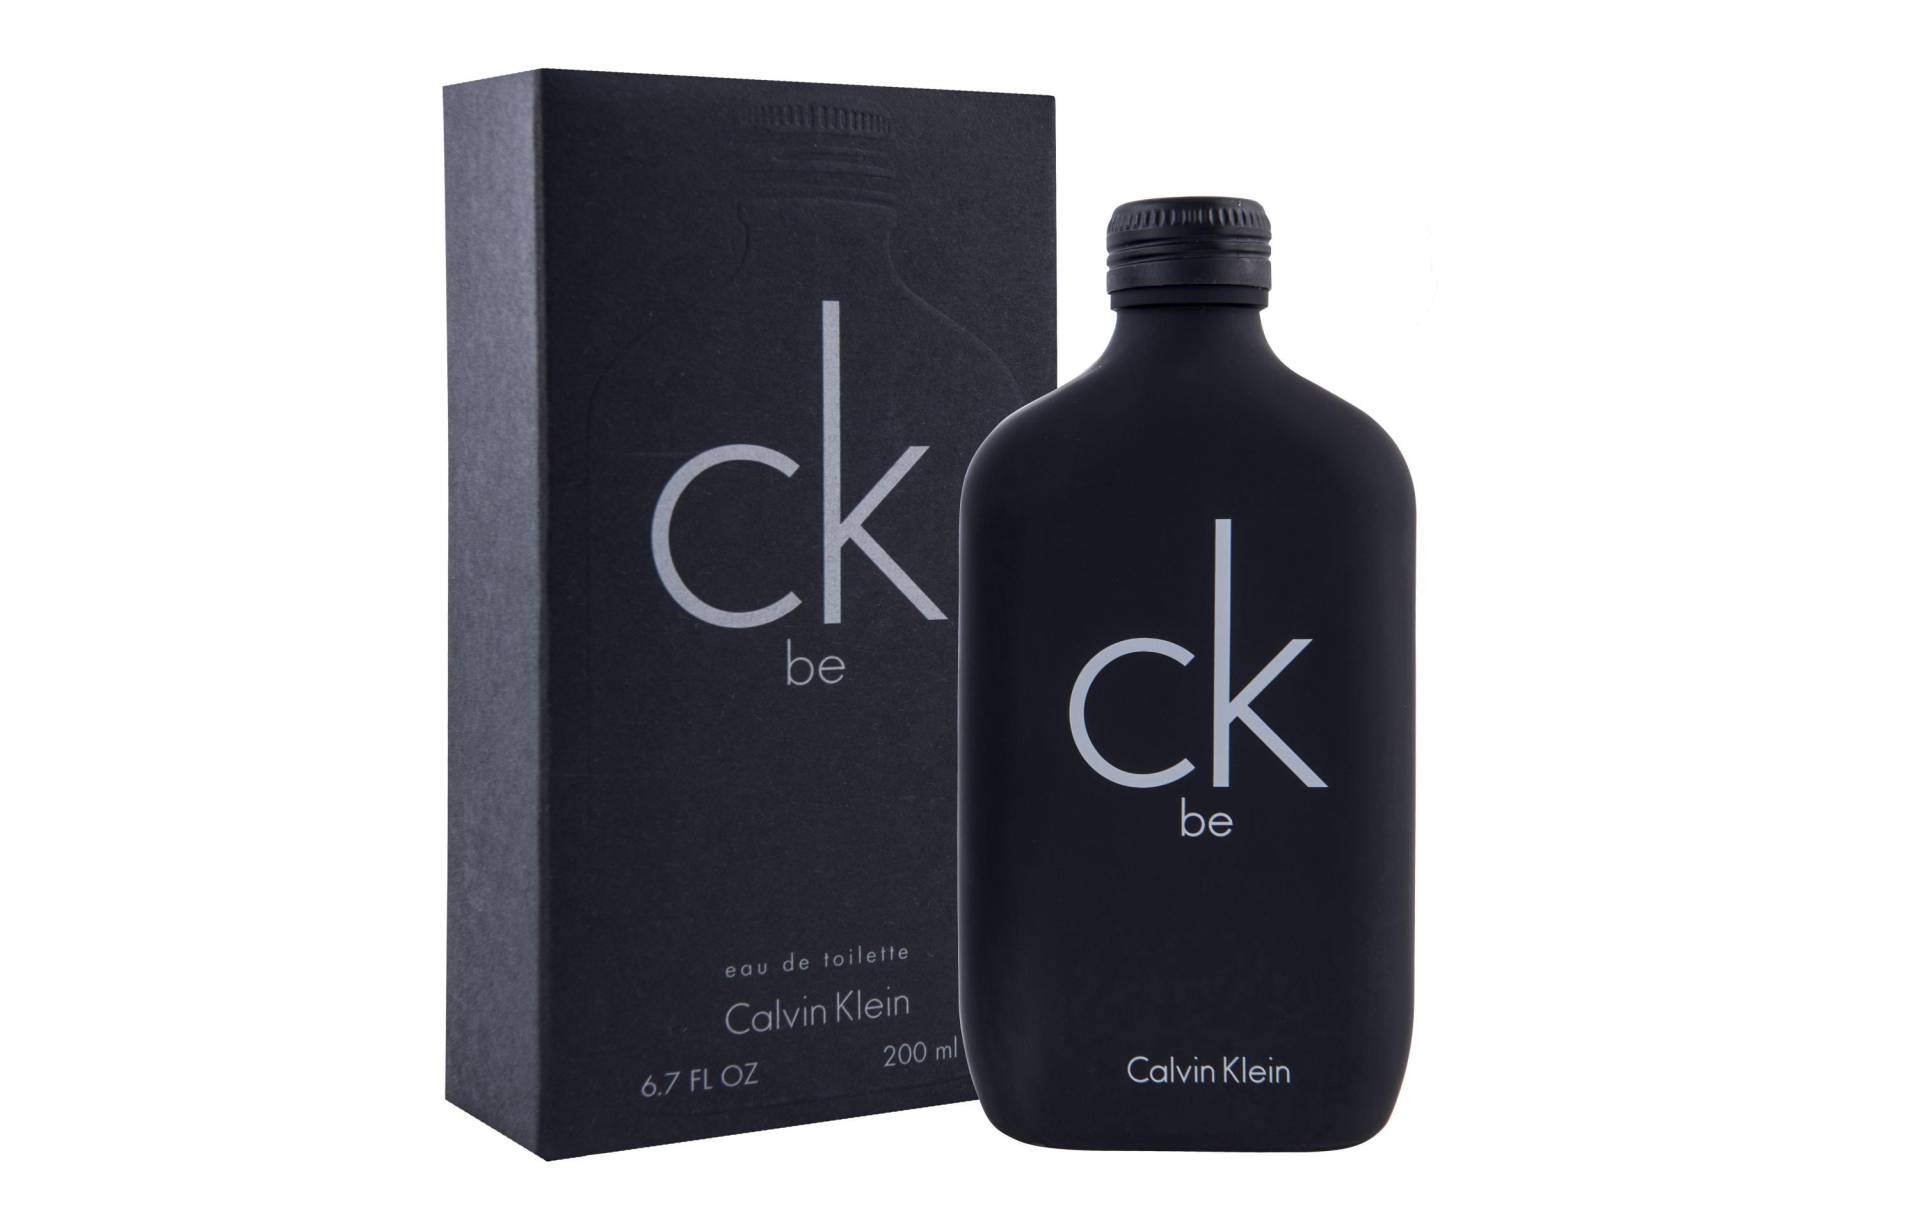 Calvin Klein Eau de Toilette »CK be 200 ml« von Calvin Klein